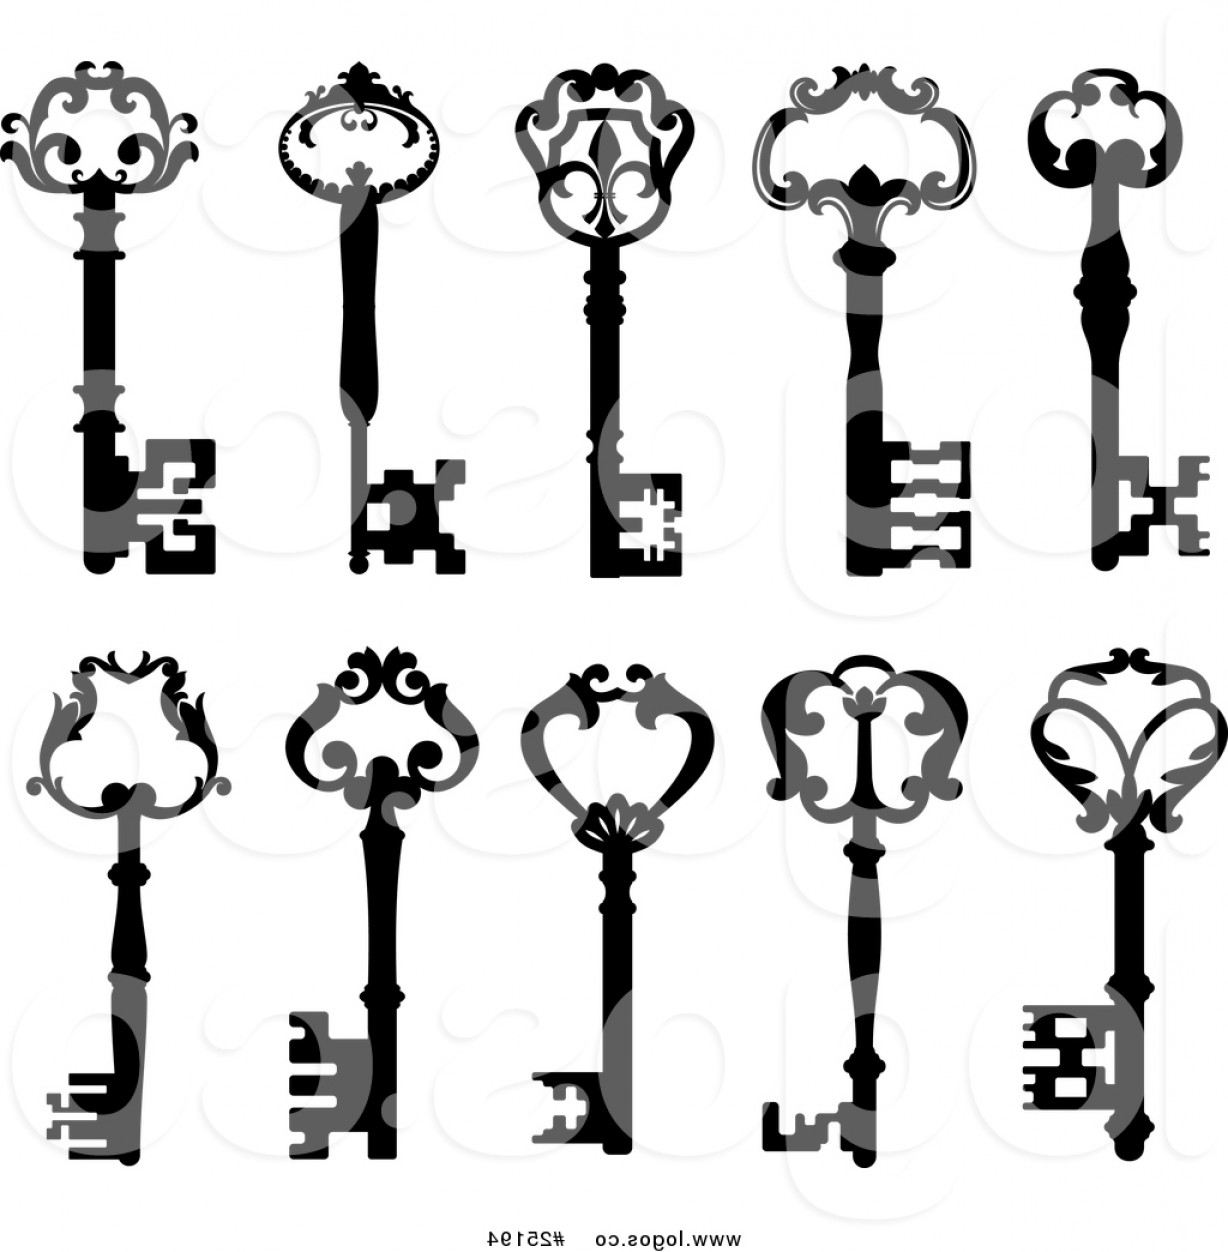 Skeleton Key Vector at Vectorified.com | Collection of Skeleton Key ...